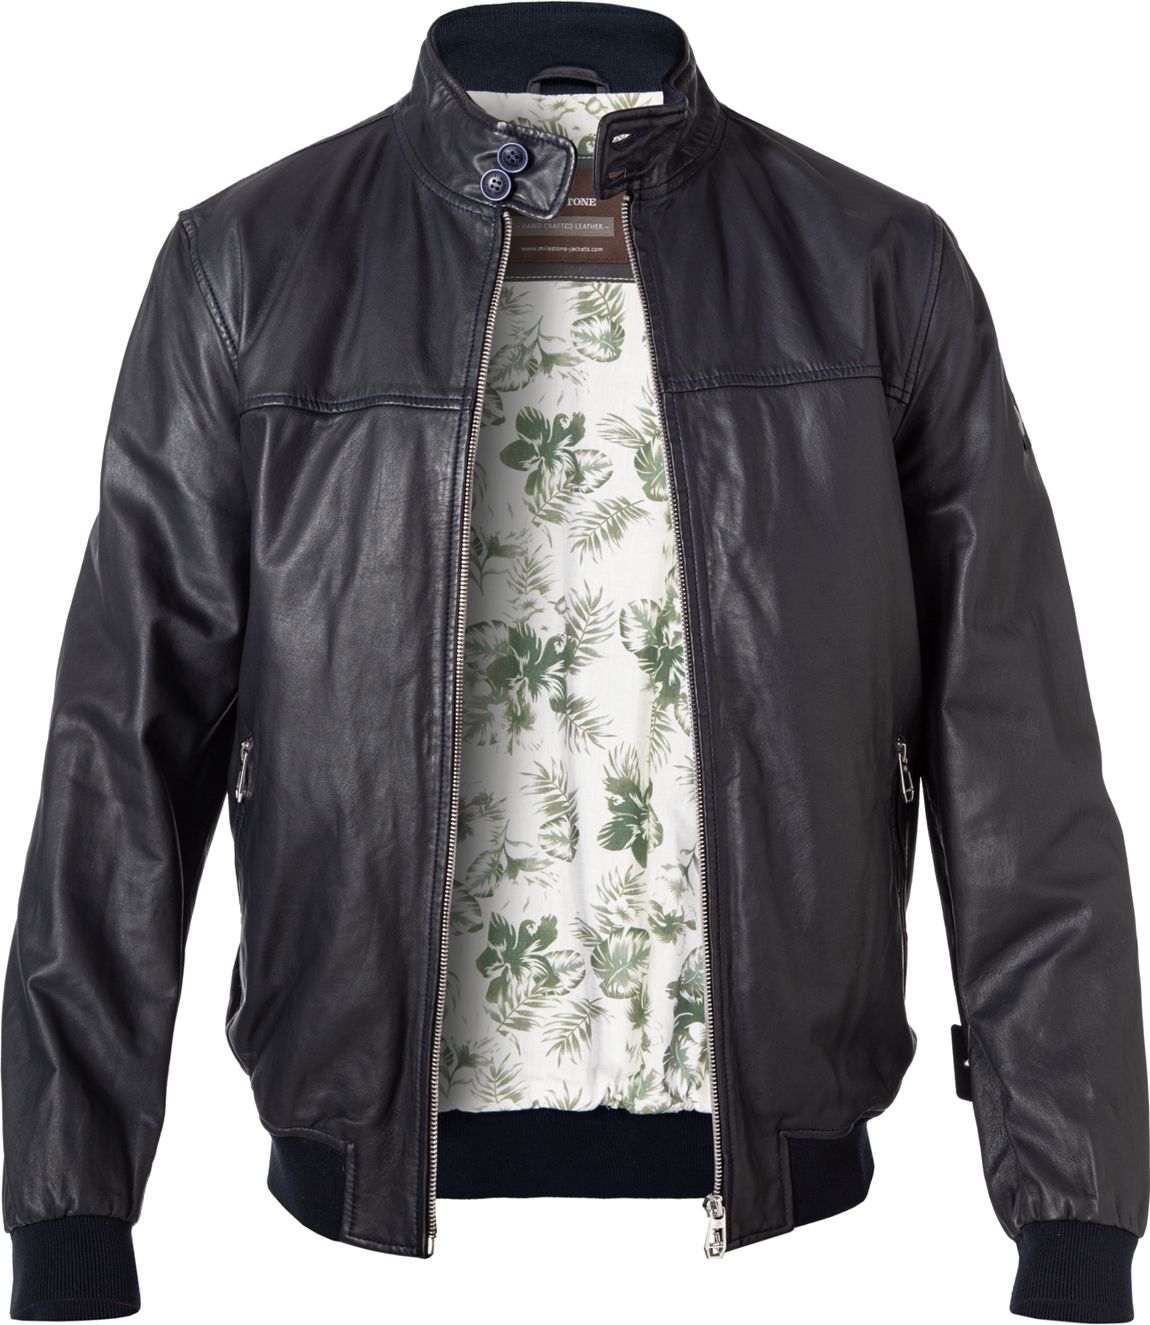 Milestone Lambskin Nappa Leather Jacket in Cognac — Uomo San Francisco |  Luxury European Menswear